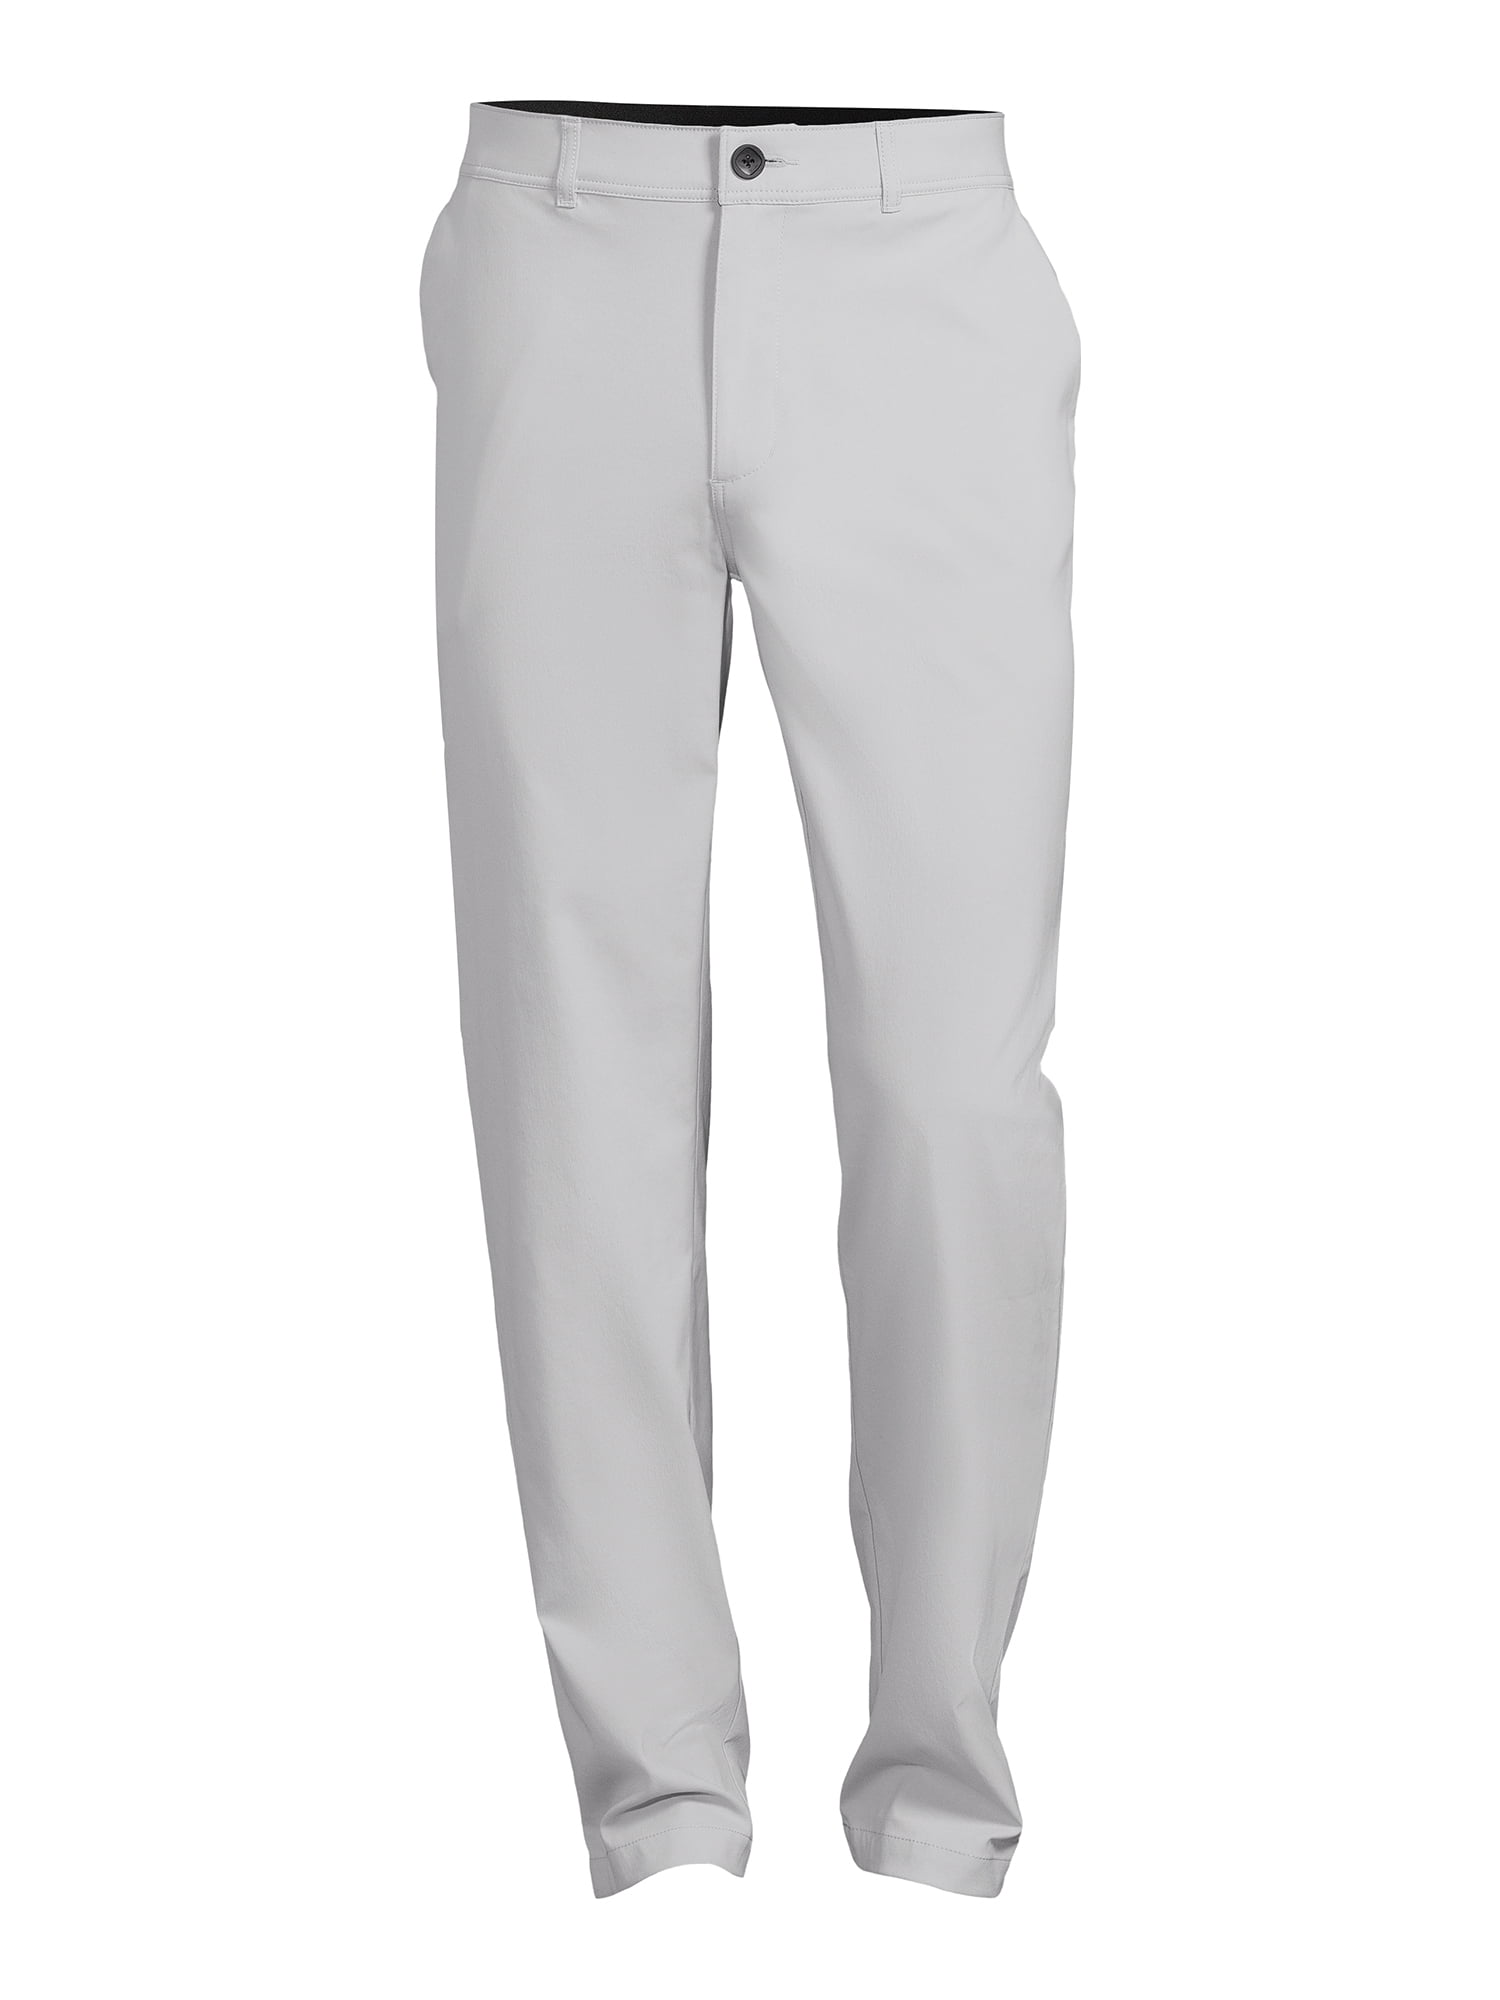 INCERUN Mens Fancy Pajamas Night Bottoms Sexy Loungewear White Pants   Walmartcom